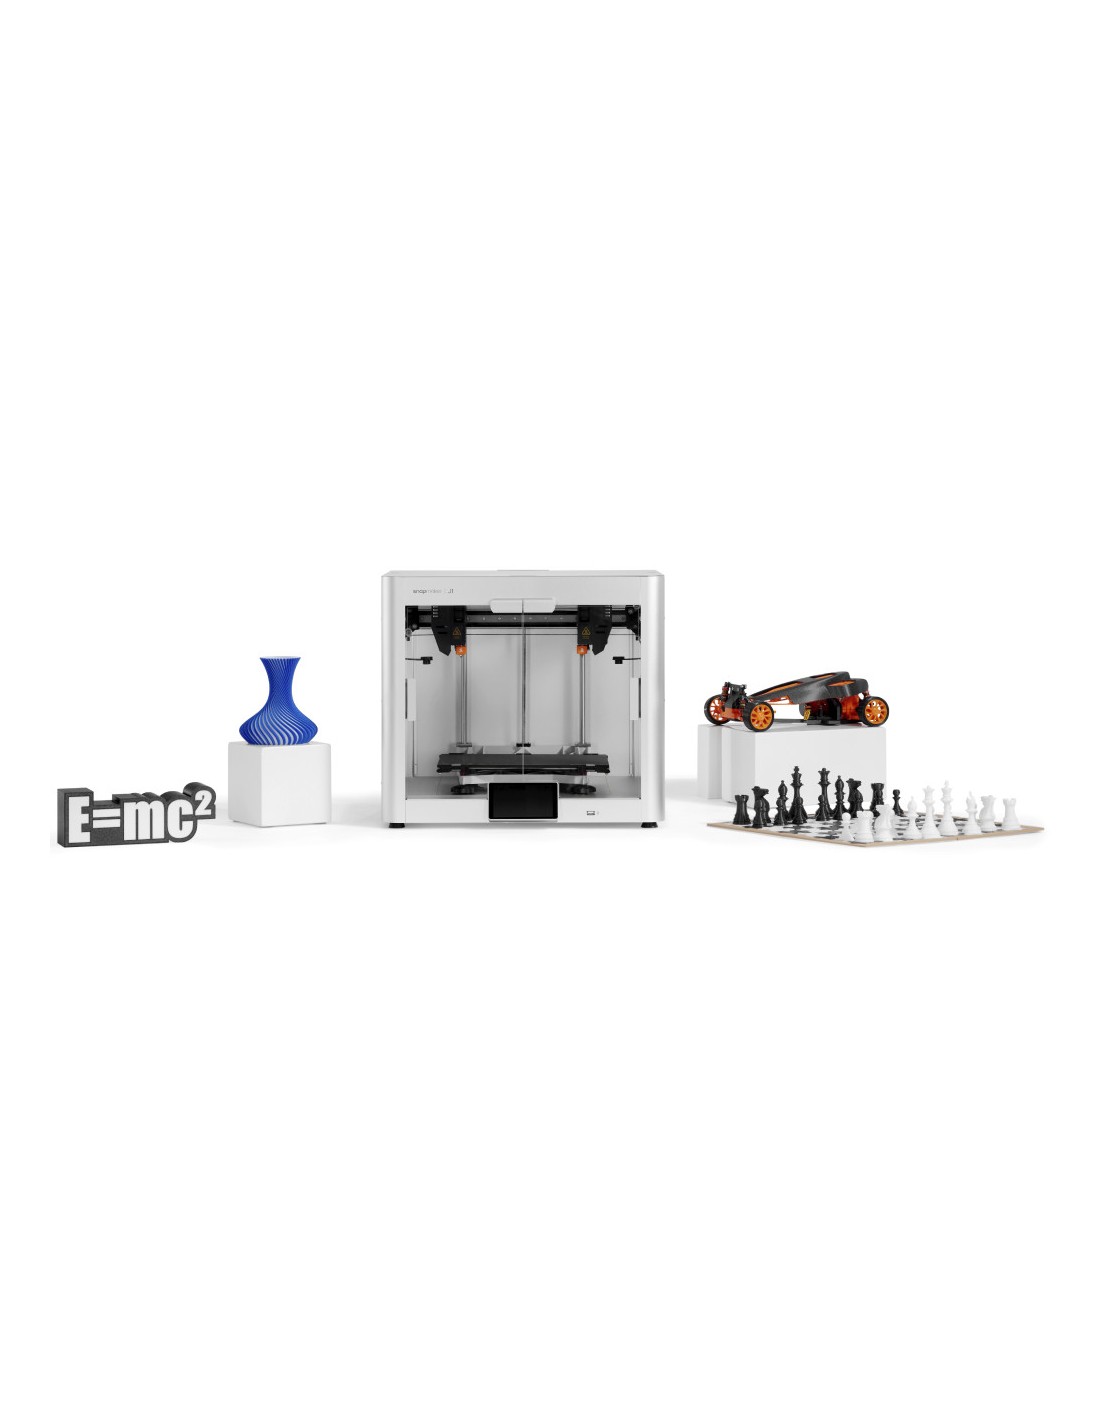 Snapmaker J1S - impresora 3D